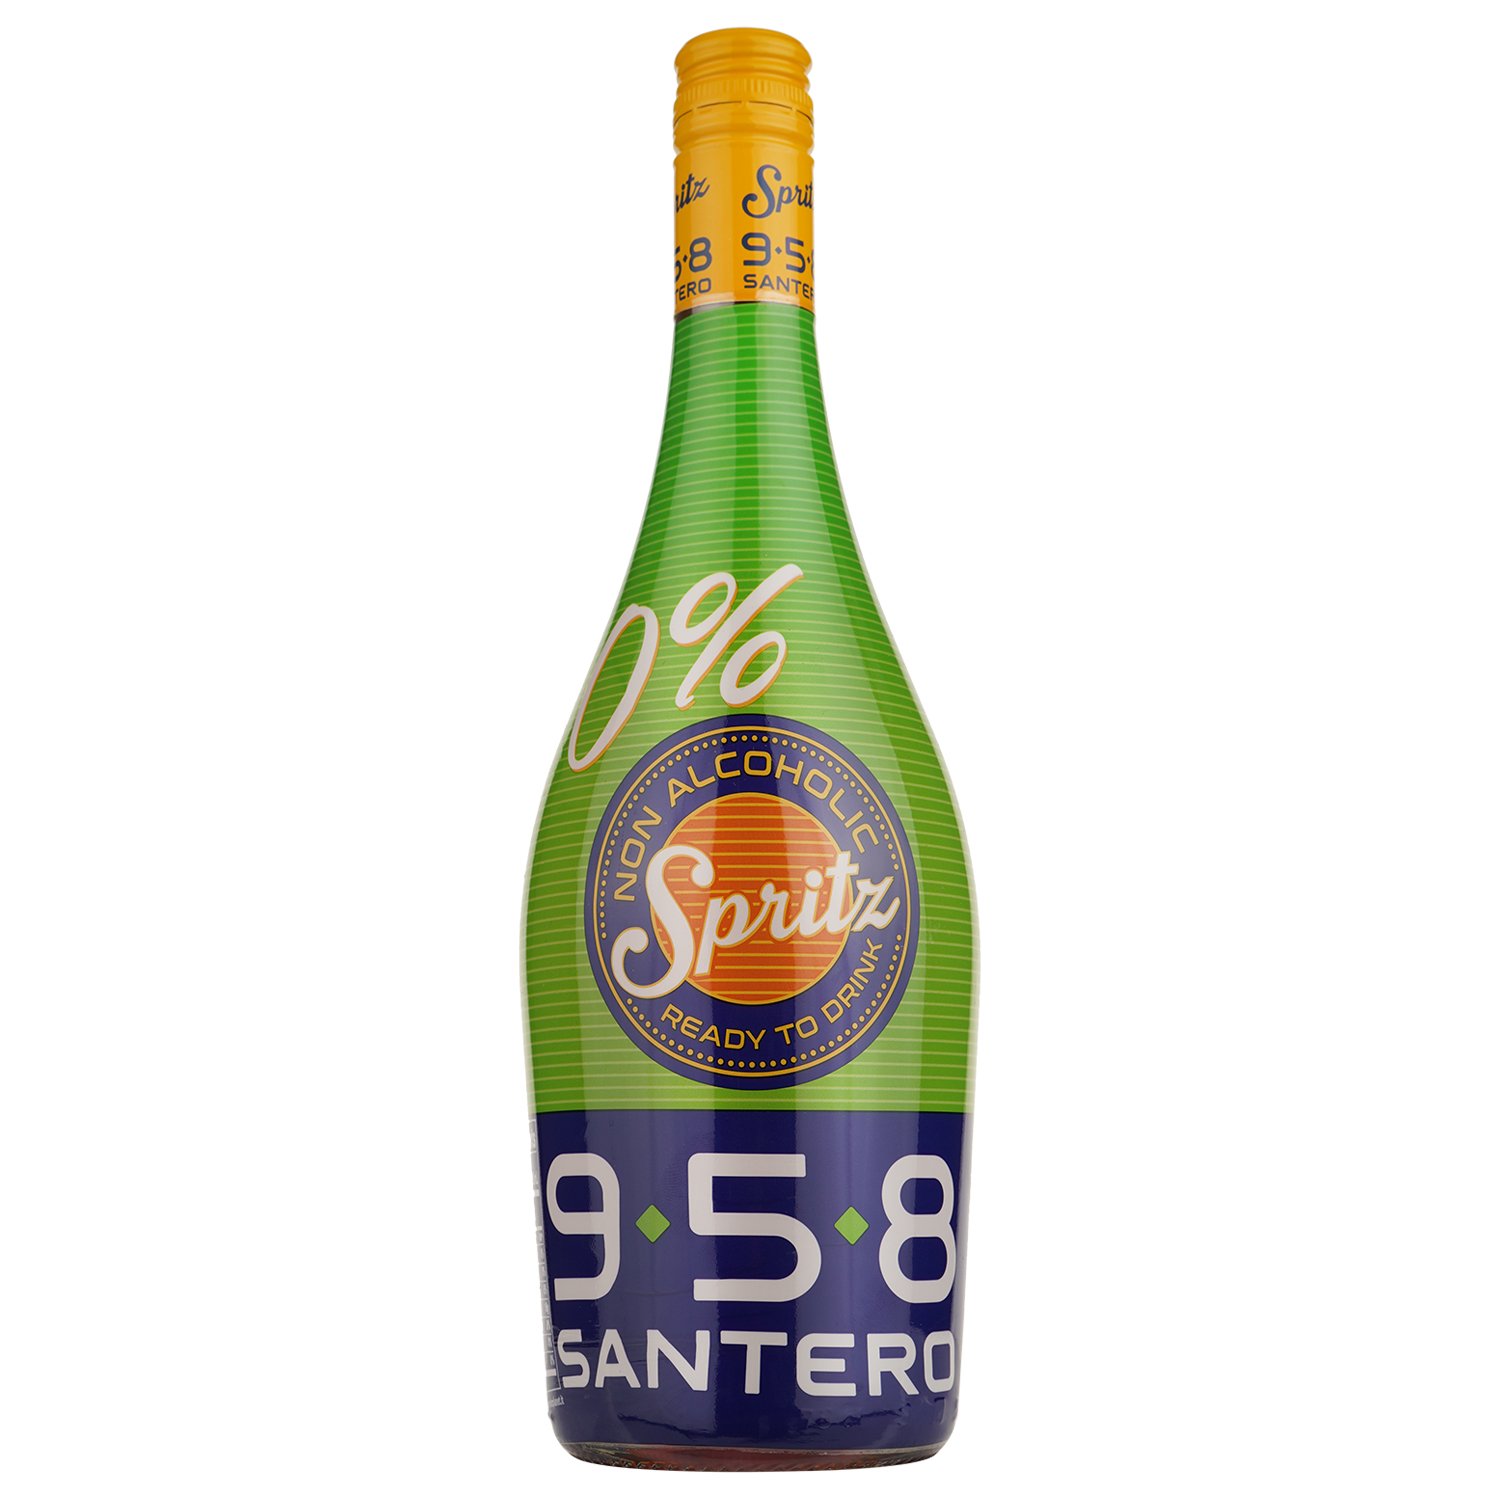 Винный напиток Santero Spritz Ready To Drink 958, 0,75 л - фото 1